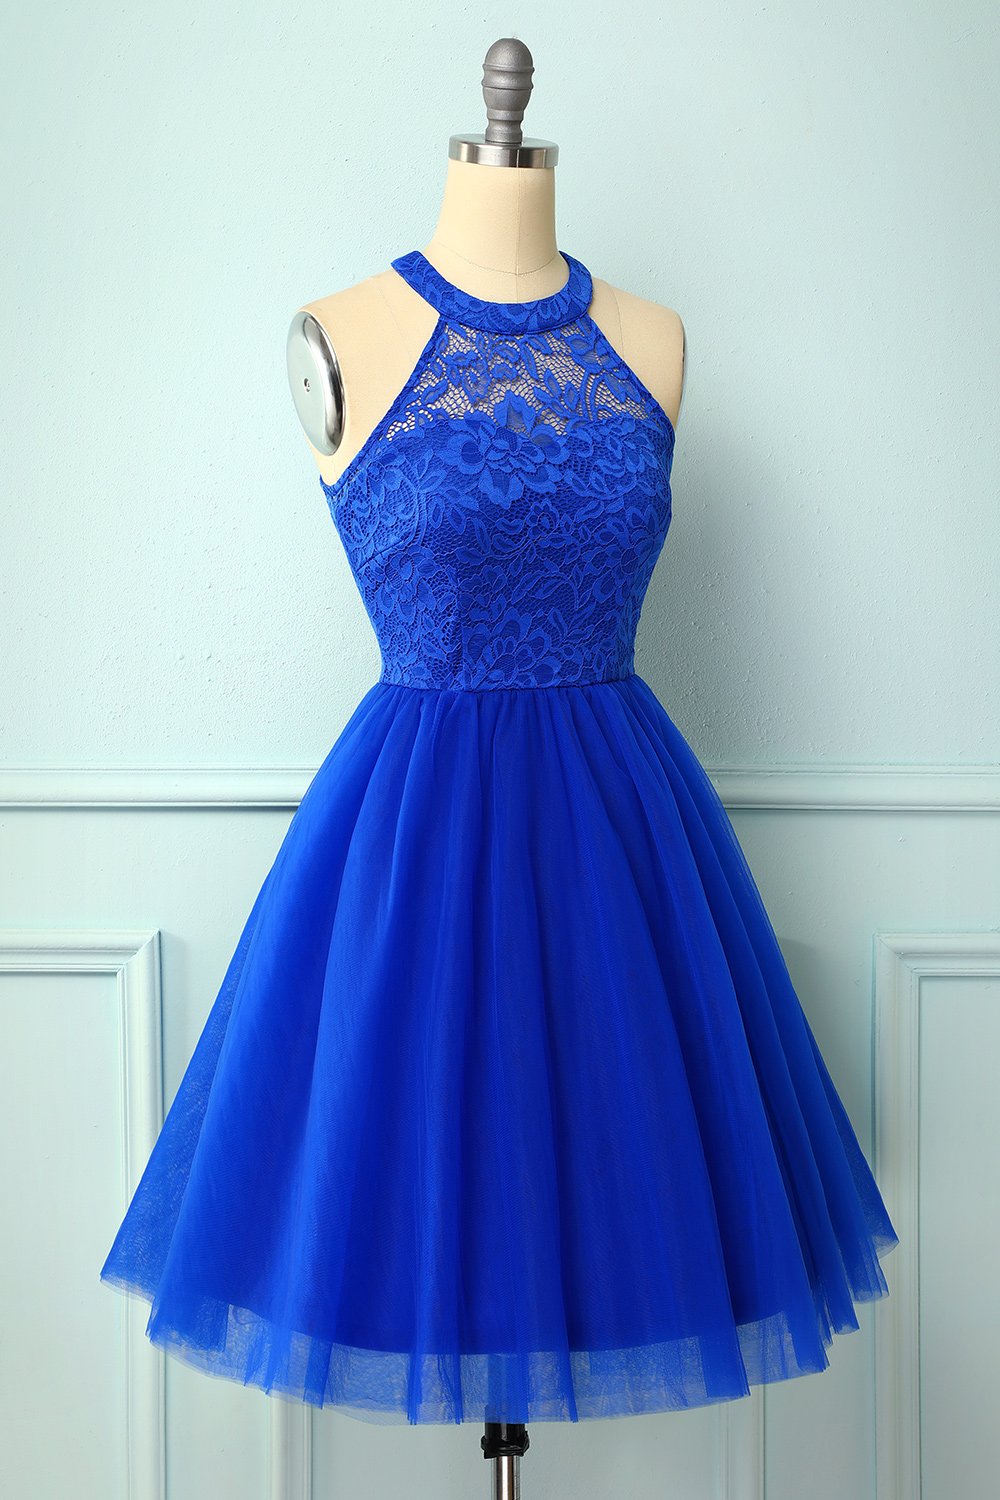 Fall Wedding Ideas, Halter Royal Blue Lace Dress